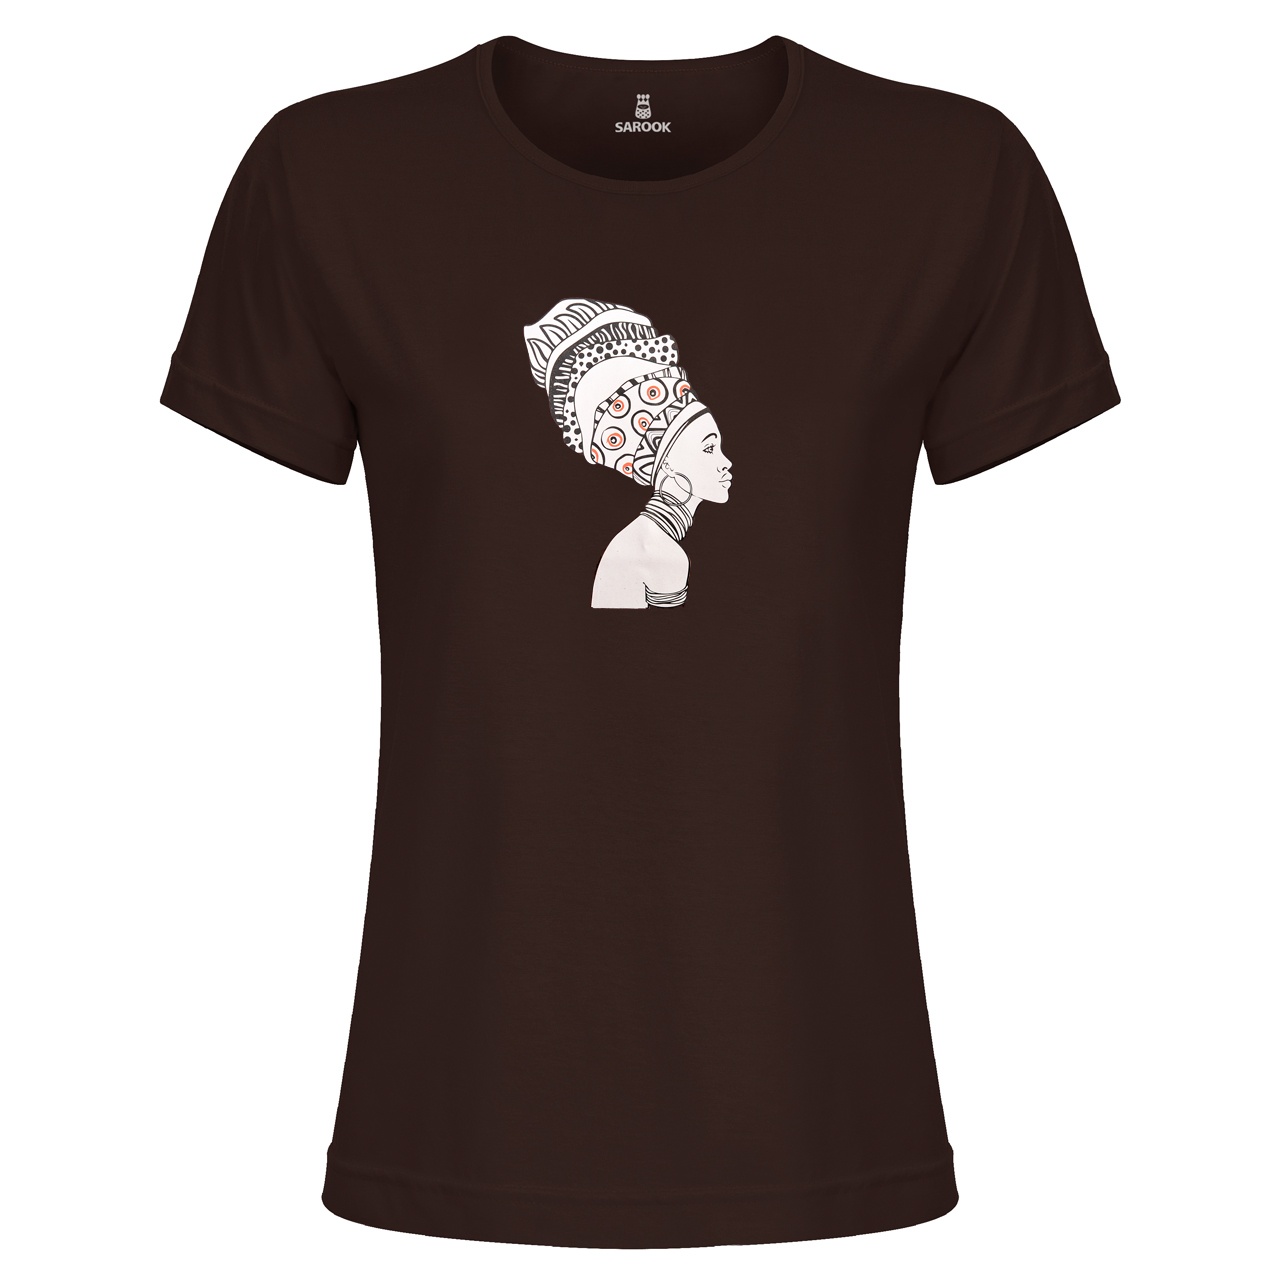 تی شرت زنانه ساروک مدل TZYUYRCH- African 03 رنگ قهوه ای